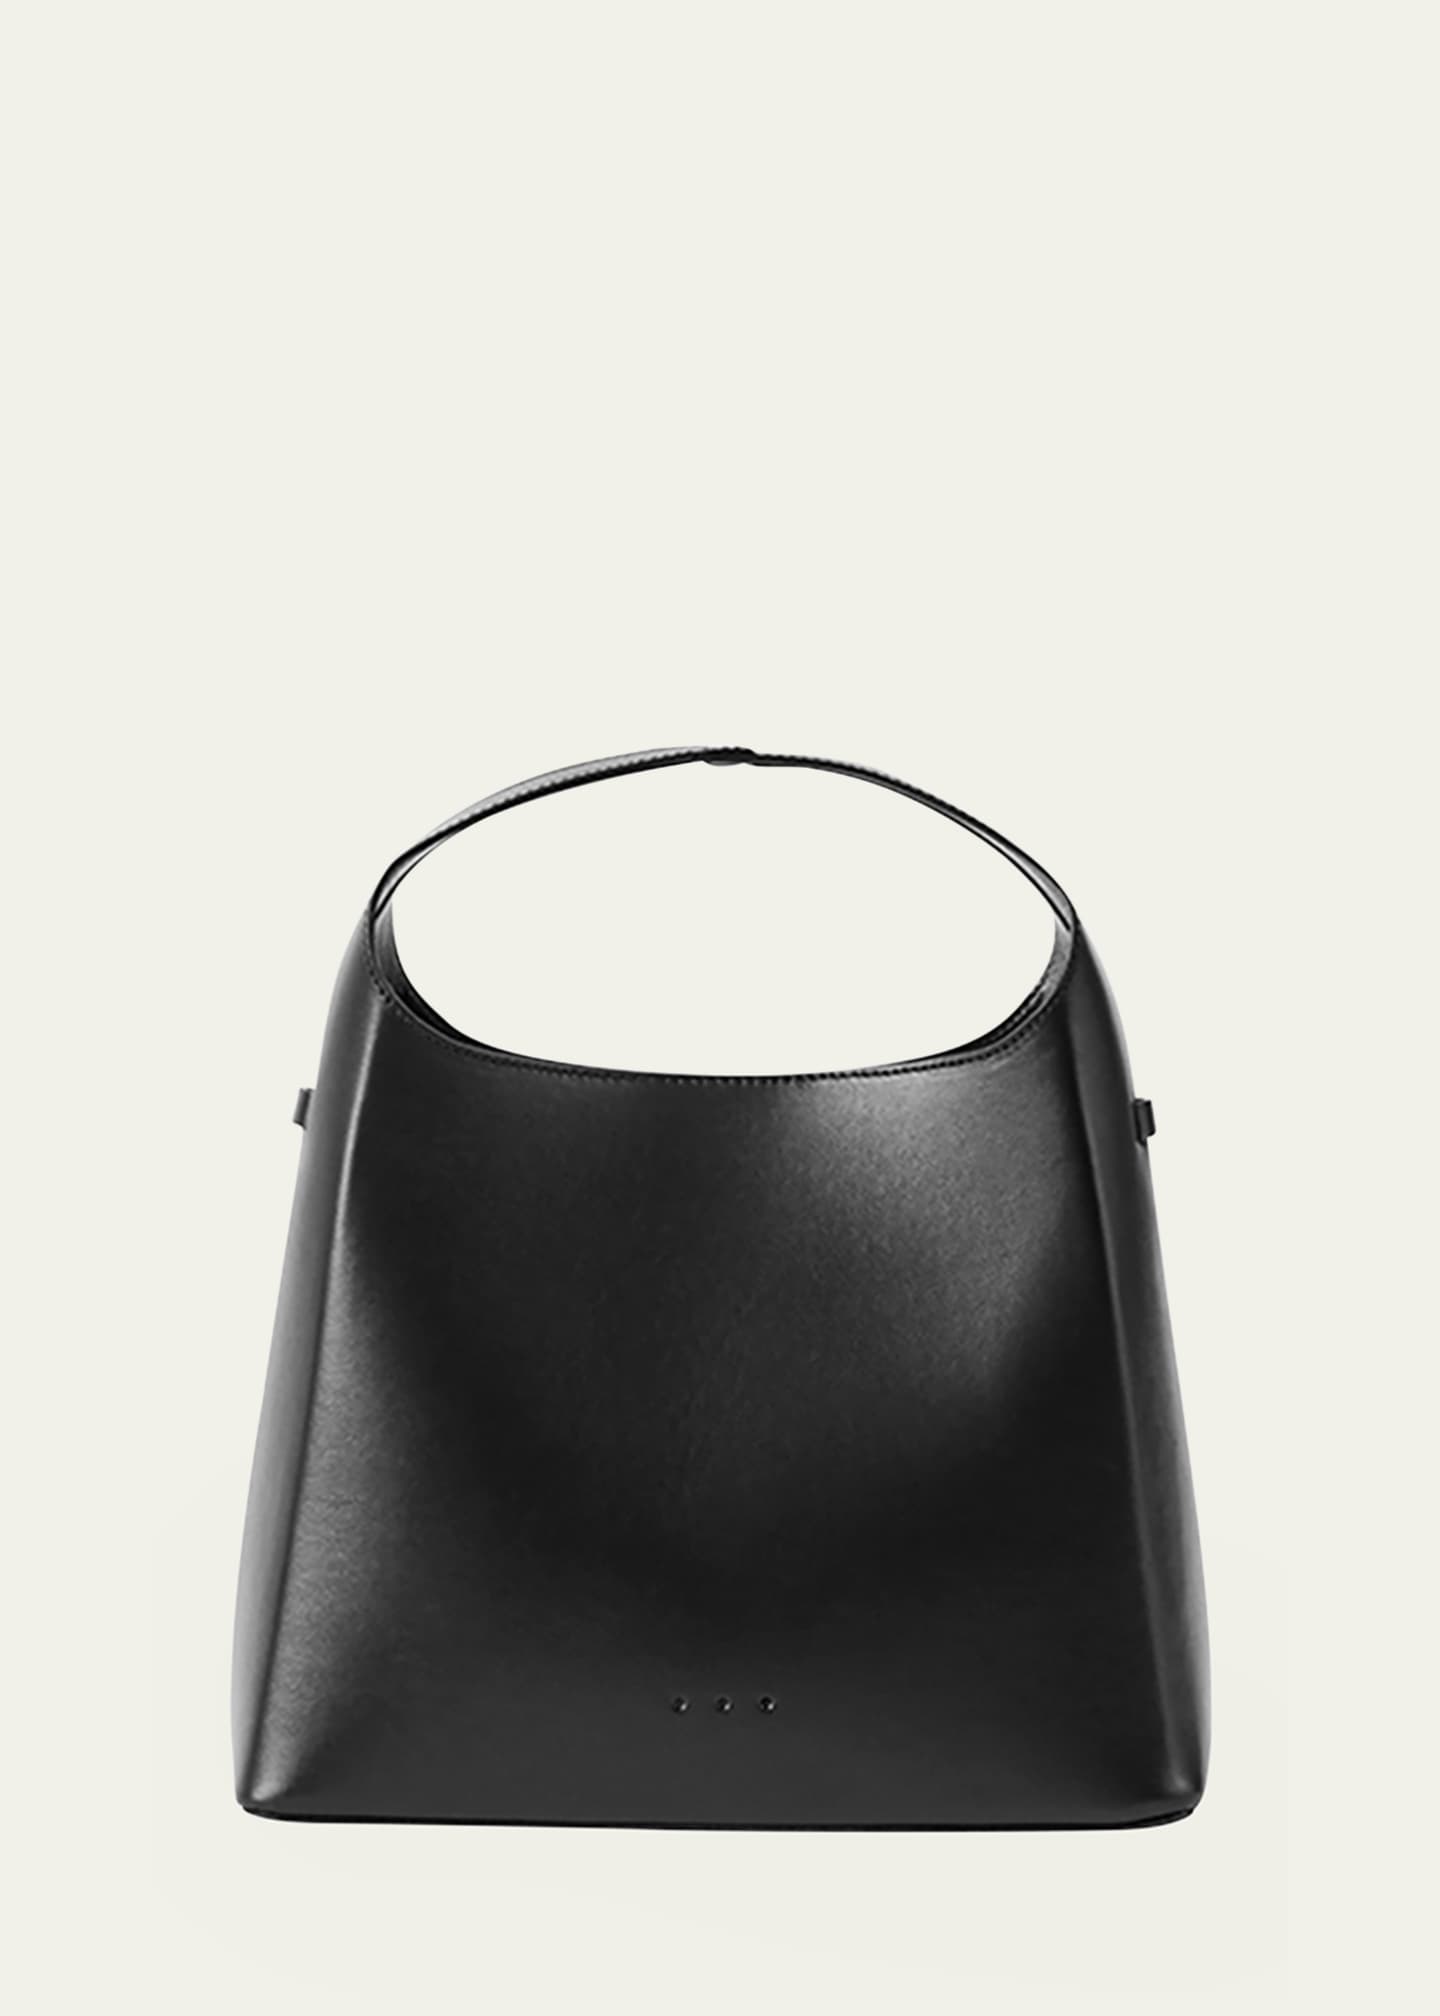 Aesther Ekme Sac Mini Calf Leather Shoulder Bag, Black, Women's, Handbags & Purses Shoulder Bags